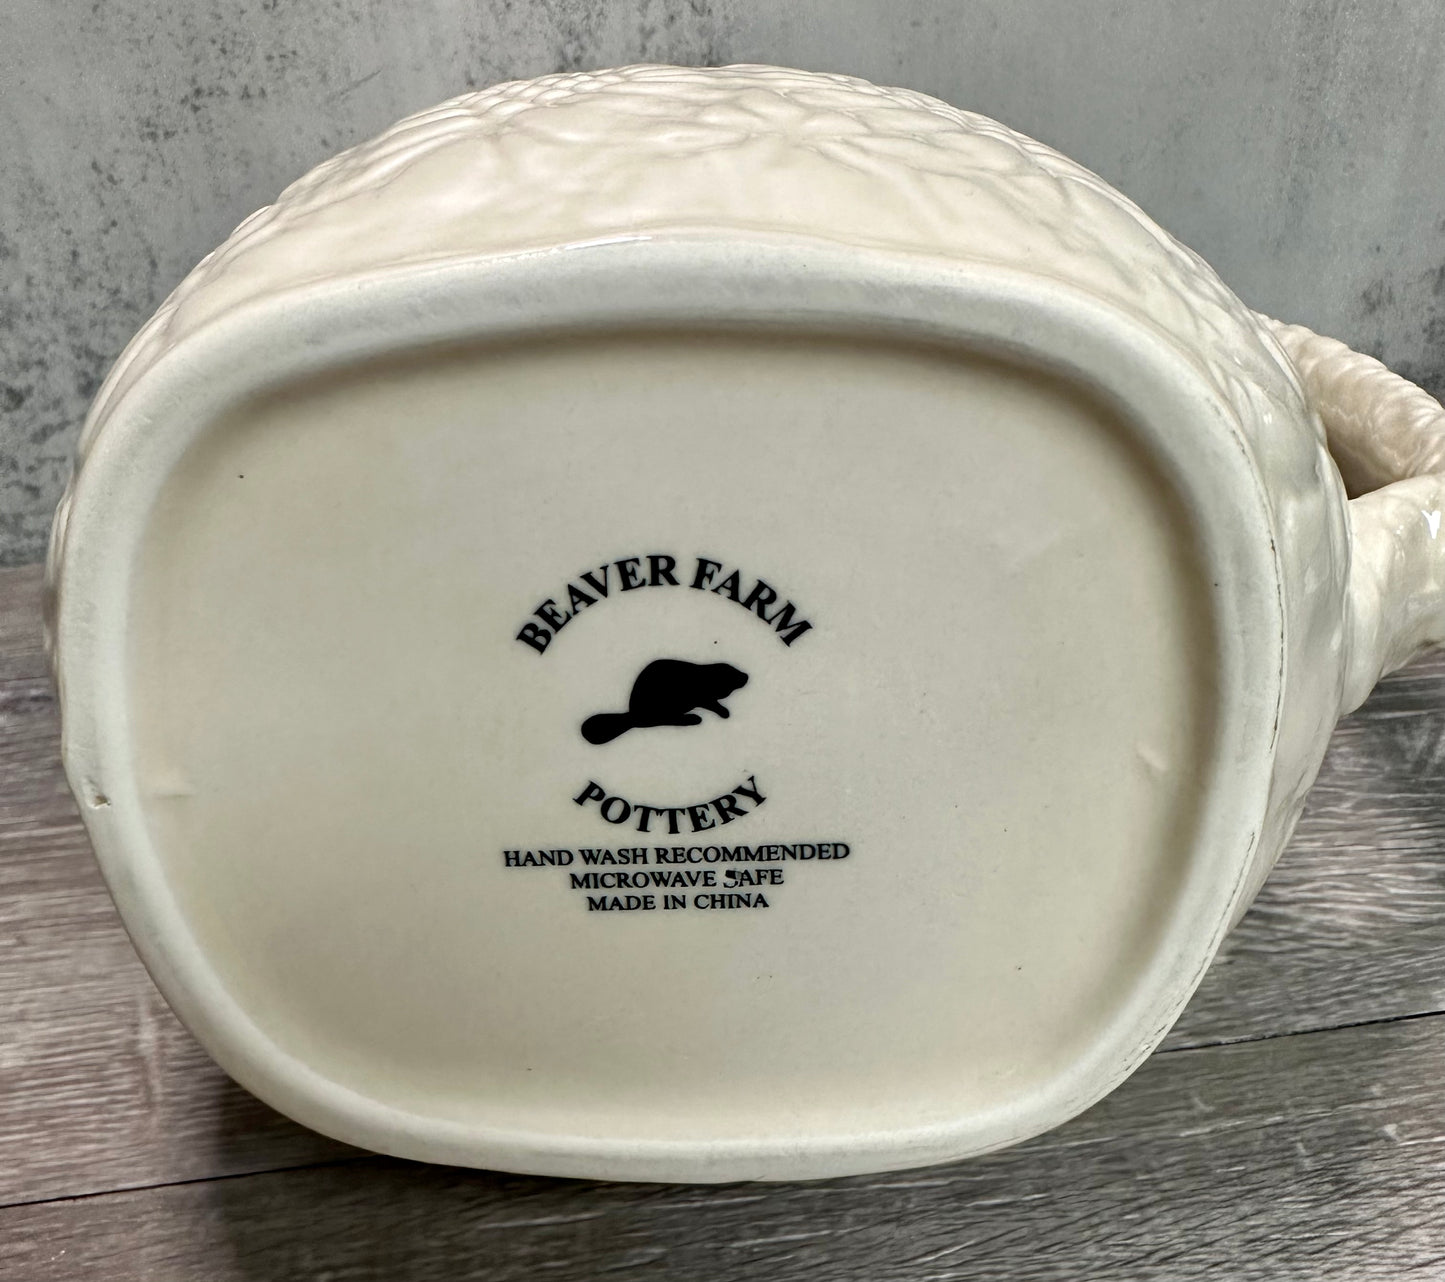 Beaver Farm Pottery Etched Ceramic Pitcher